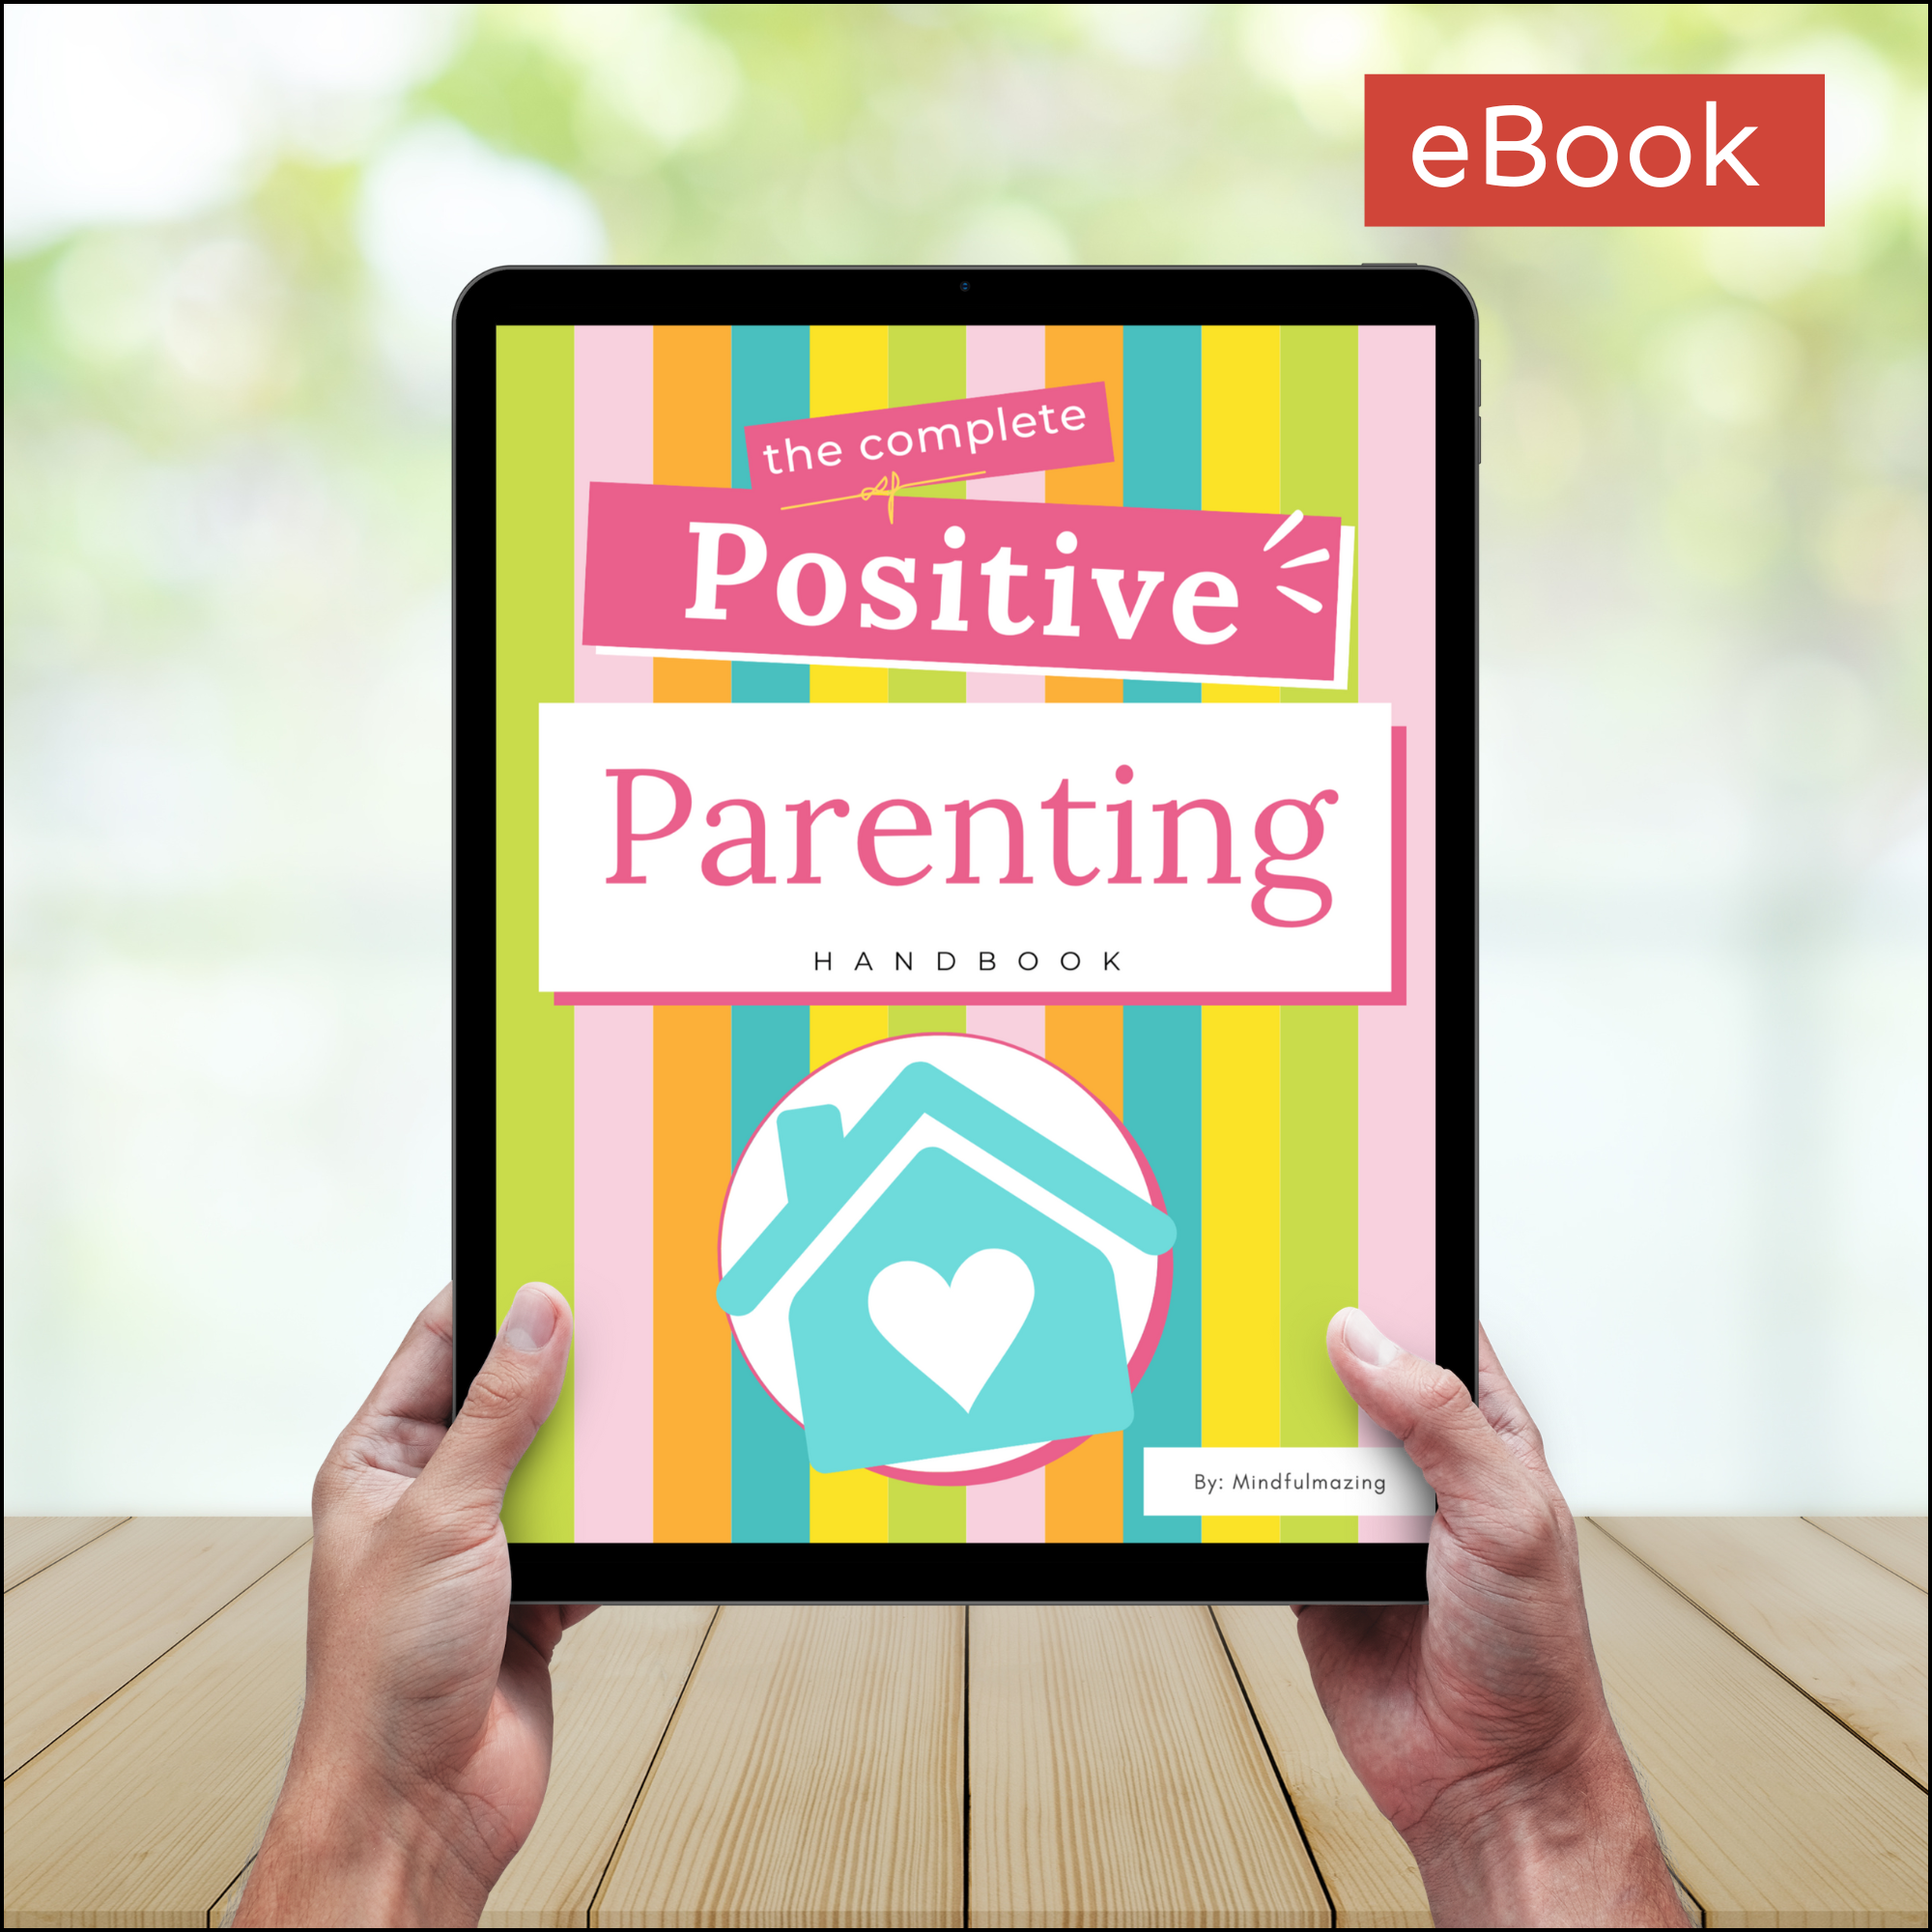 Positive Parenting Handbook